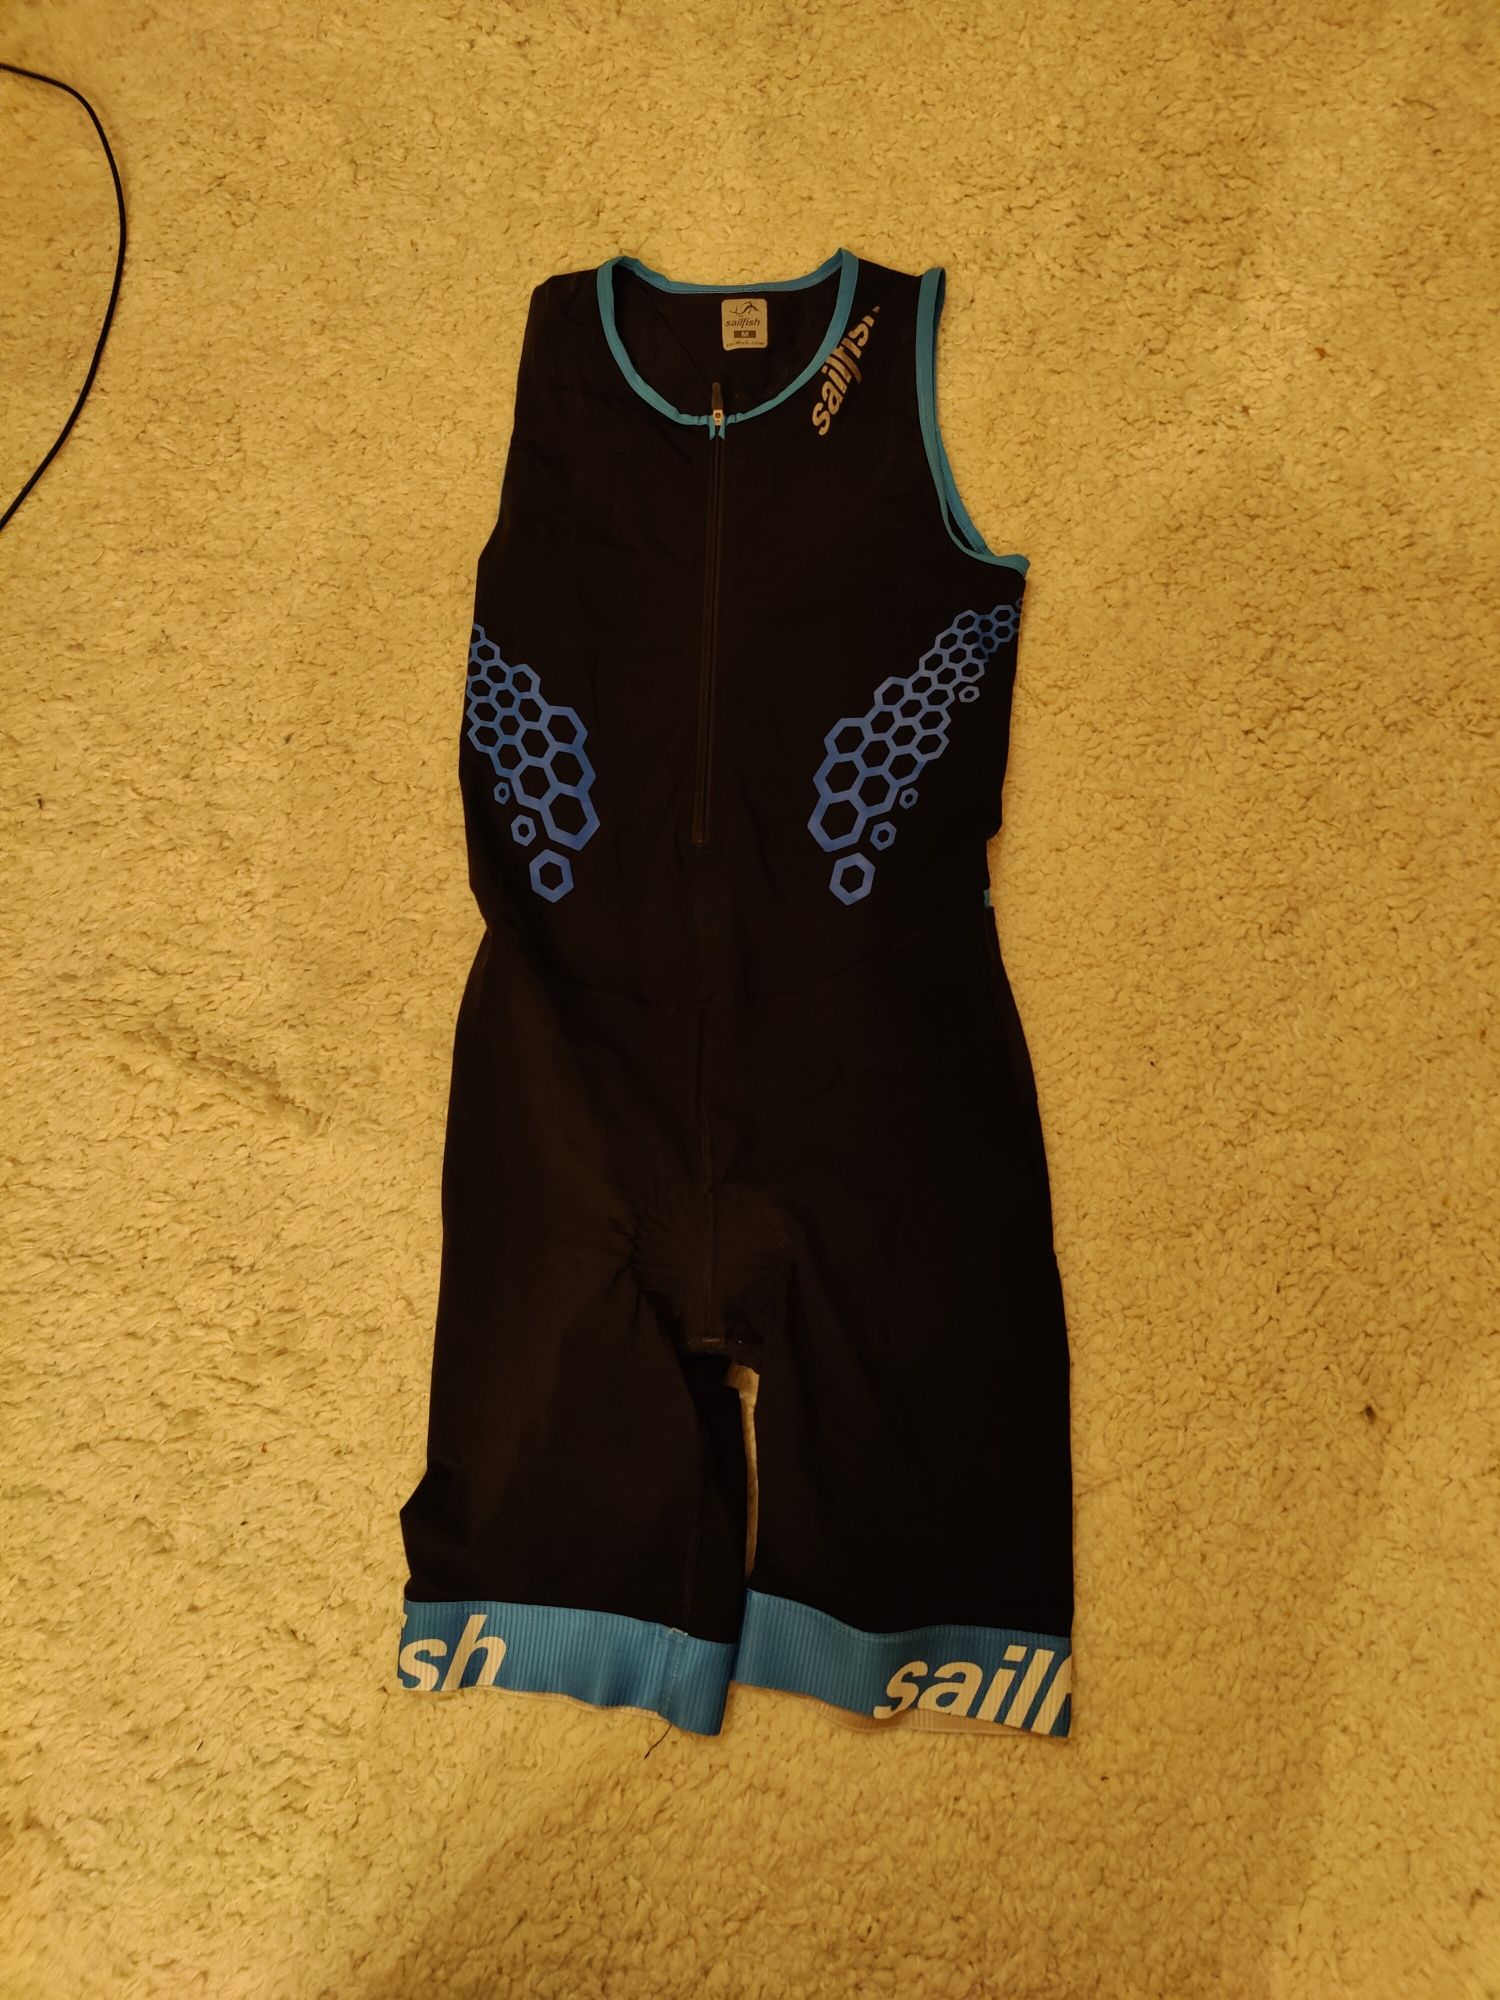 Costum triathlon (trisuit) Sailfish Pro mărimea M